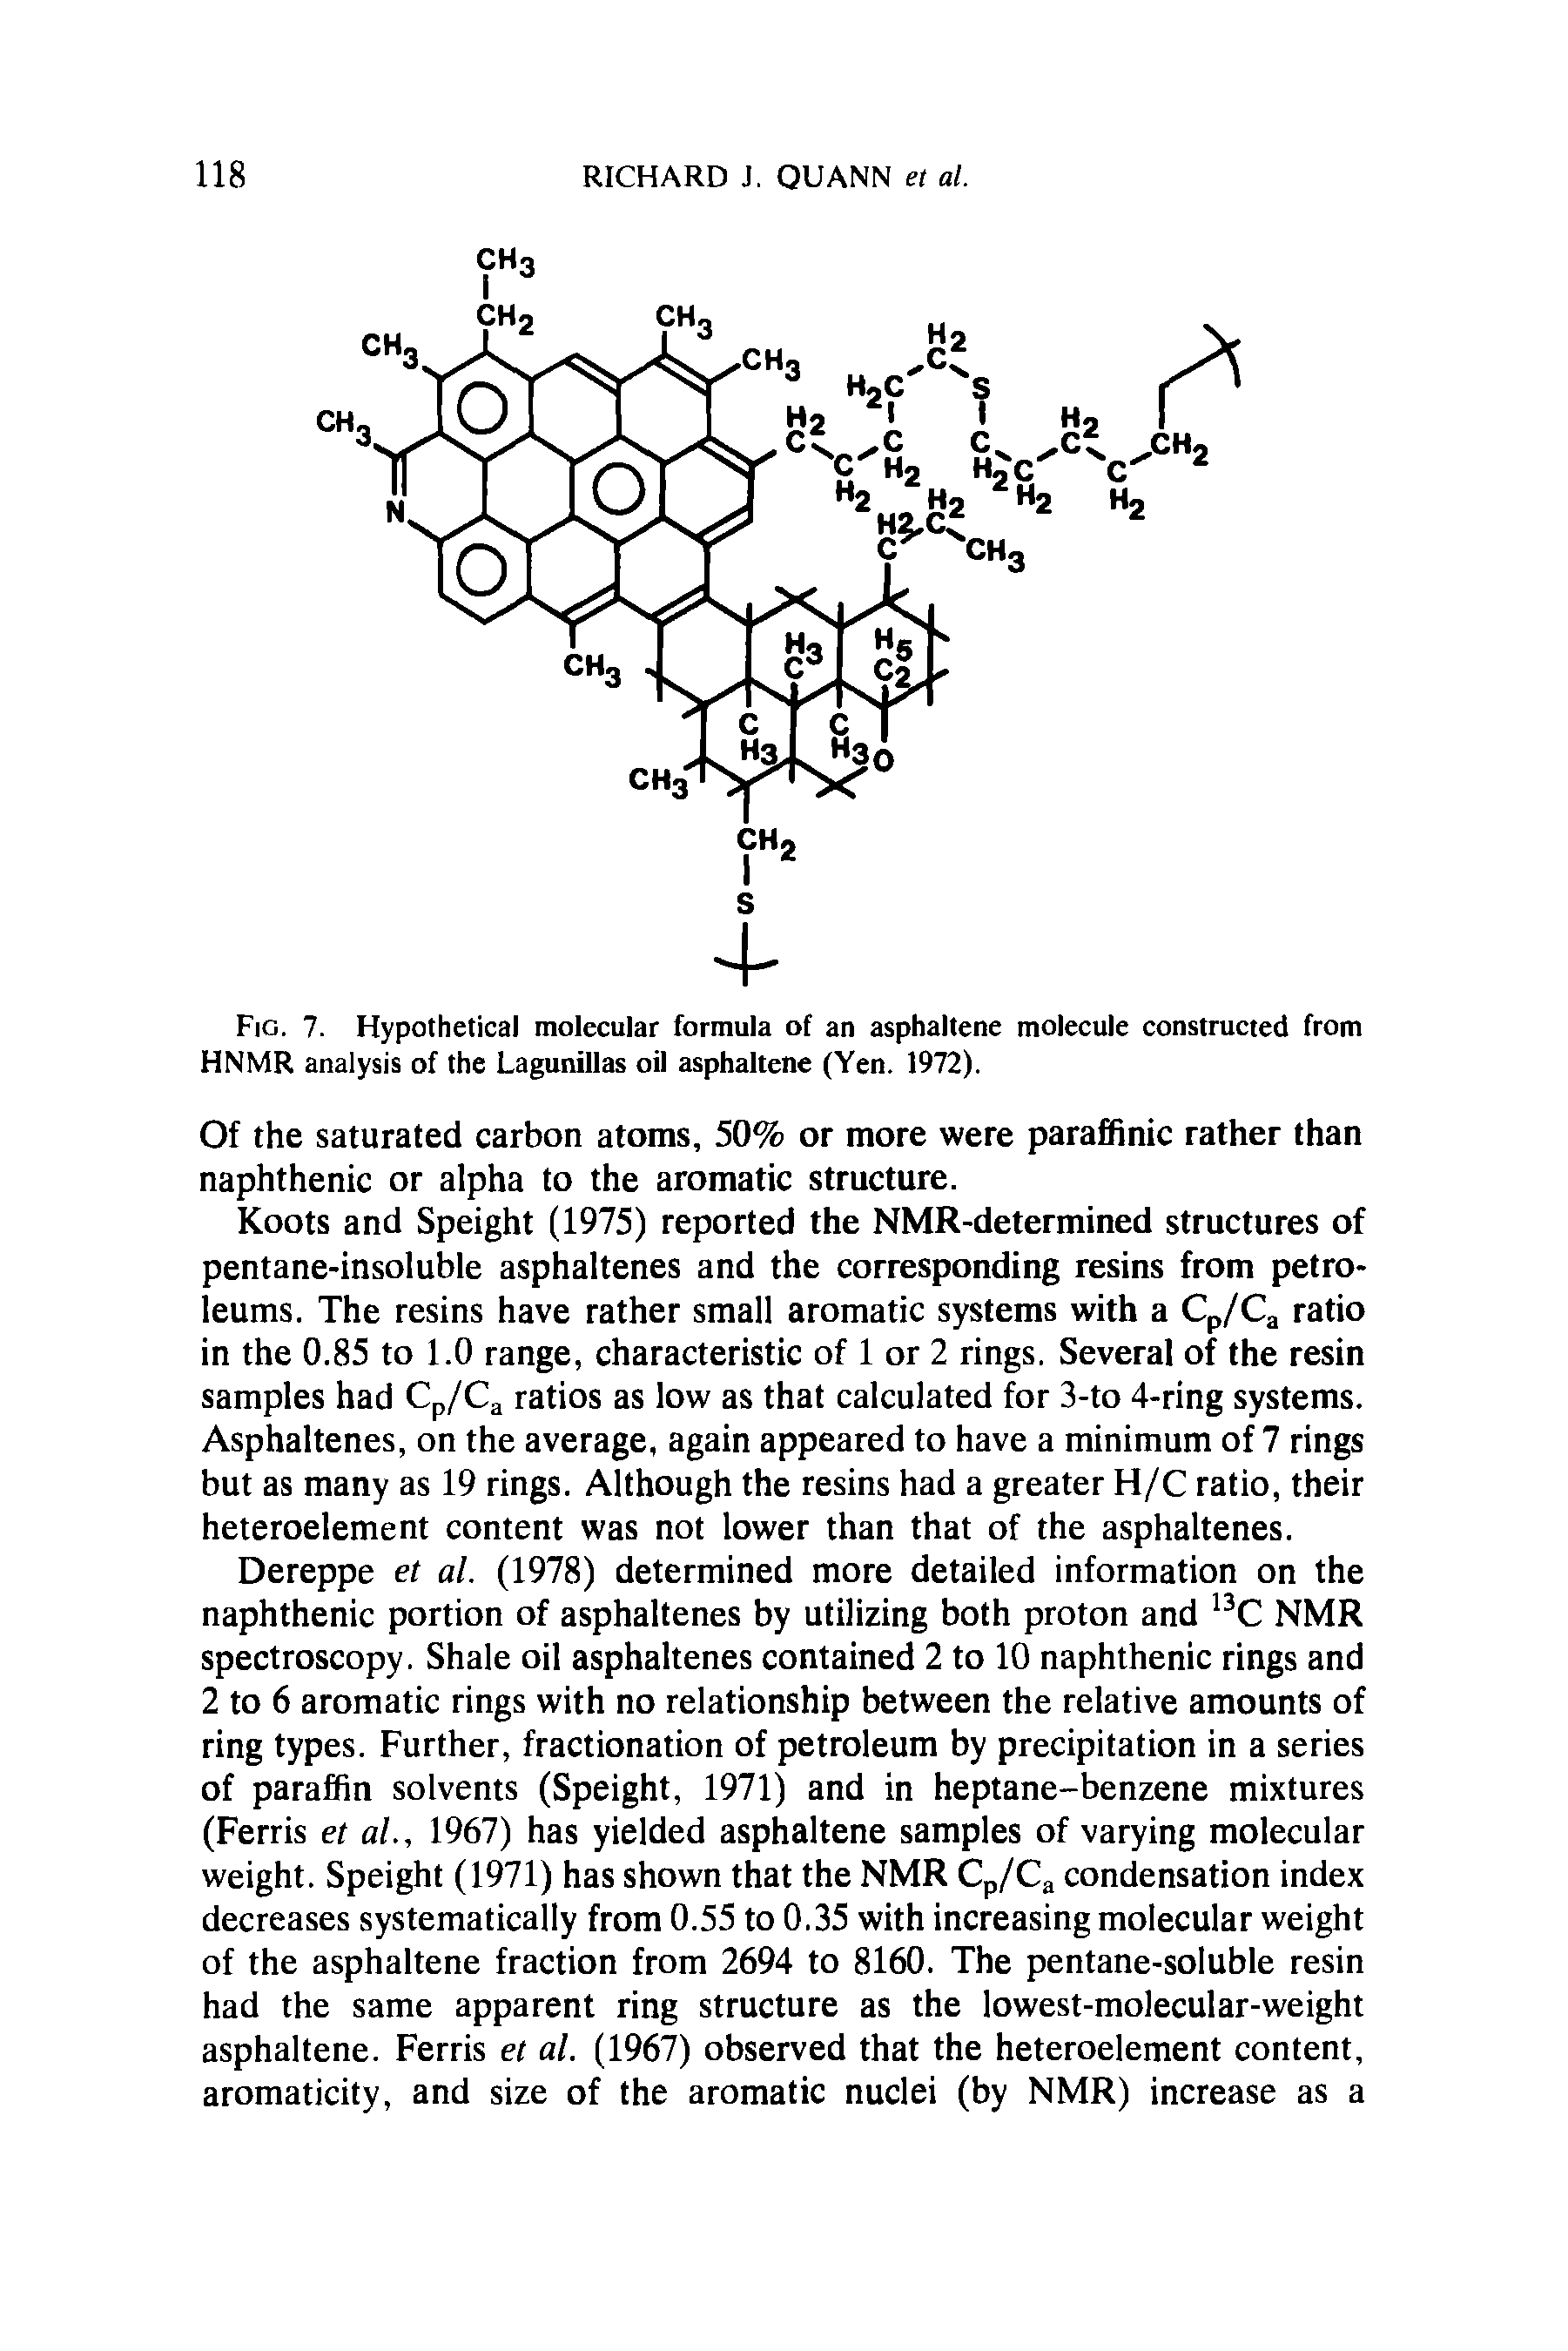 Fig. 7. Hypothetical molecular formula of an asphaltene molecule constructed from HNMR analysis of the Lagunillas oil asphaltene (Yen. 1972).